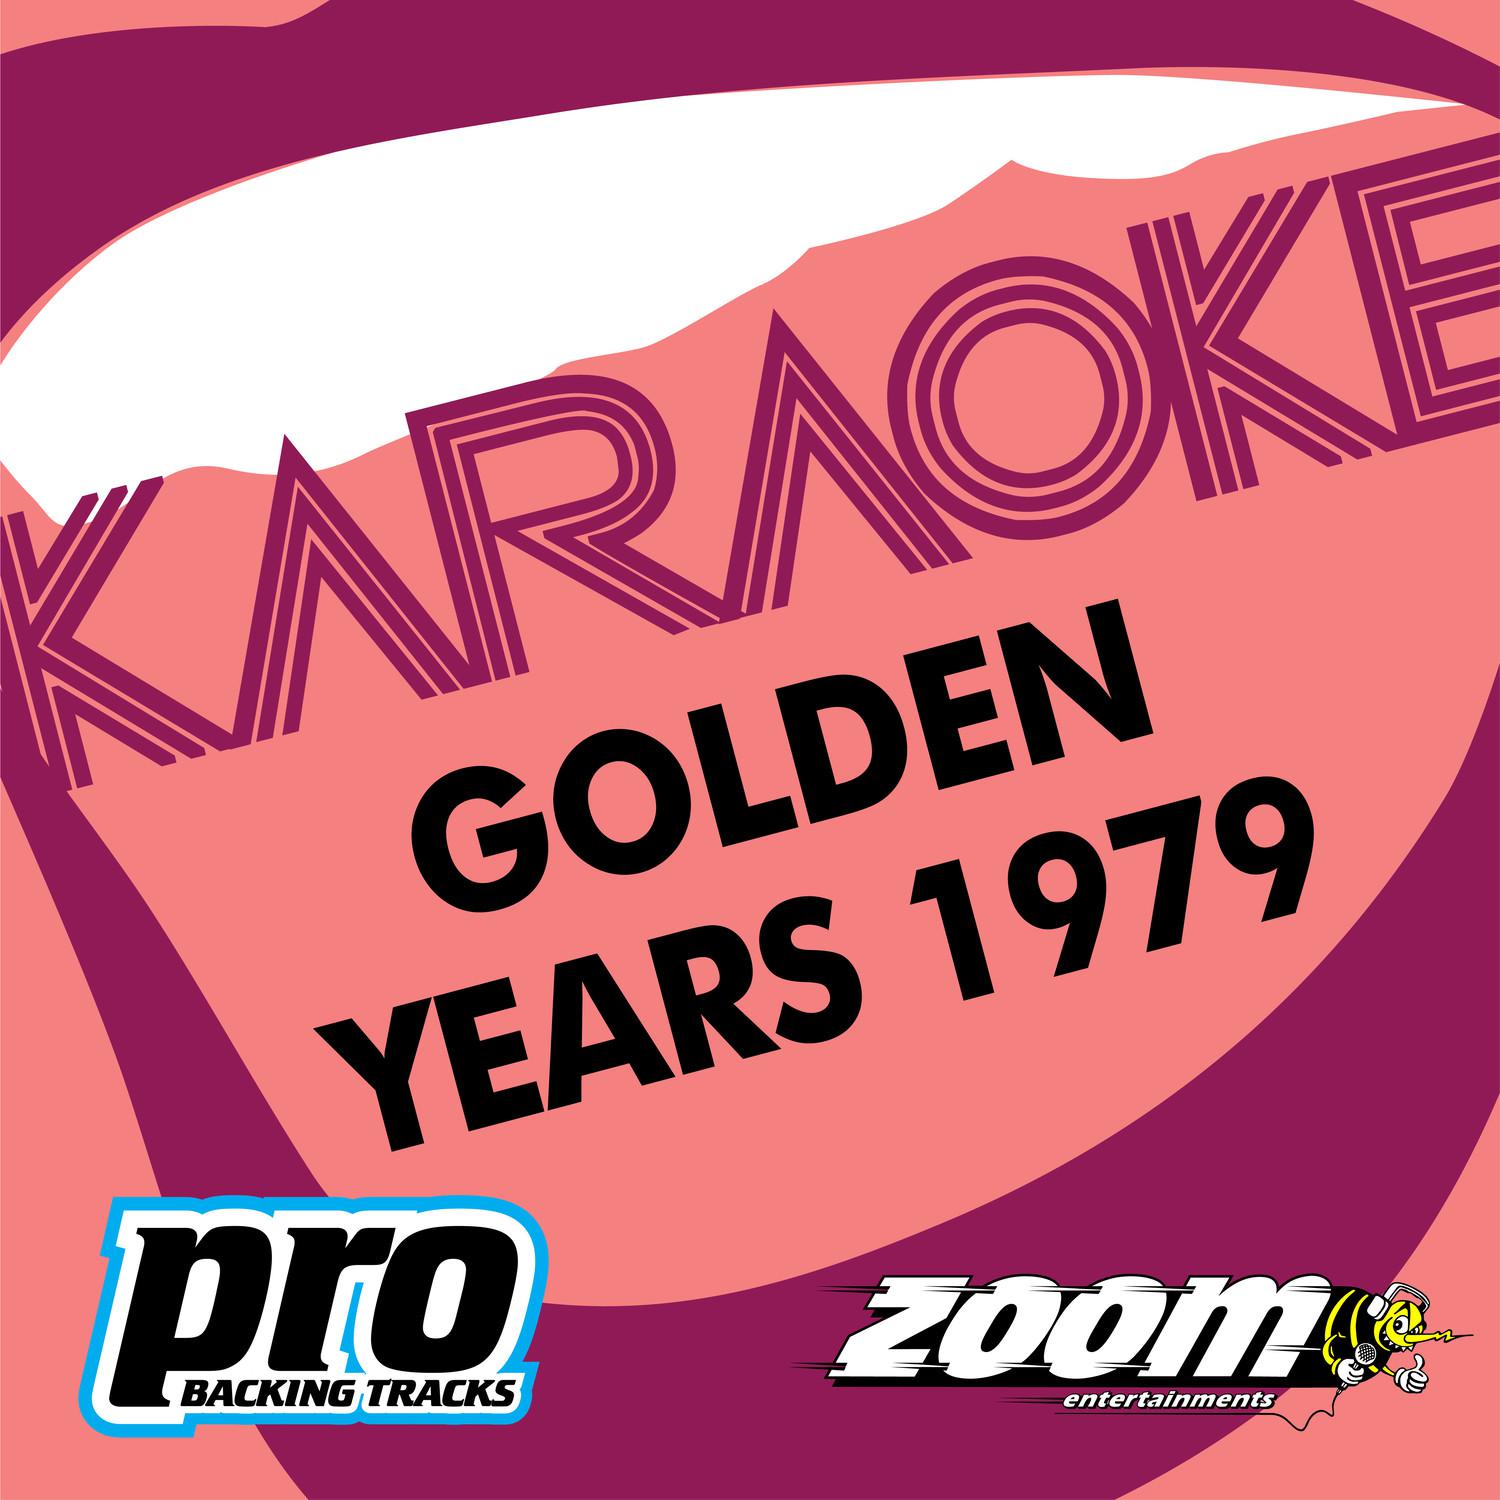 Zoom Karaoke Golden Years 1979